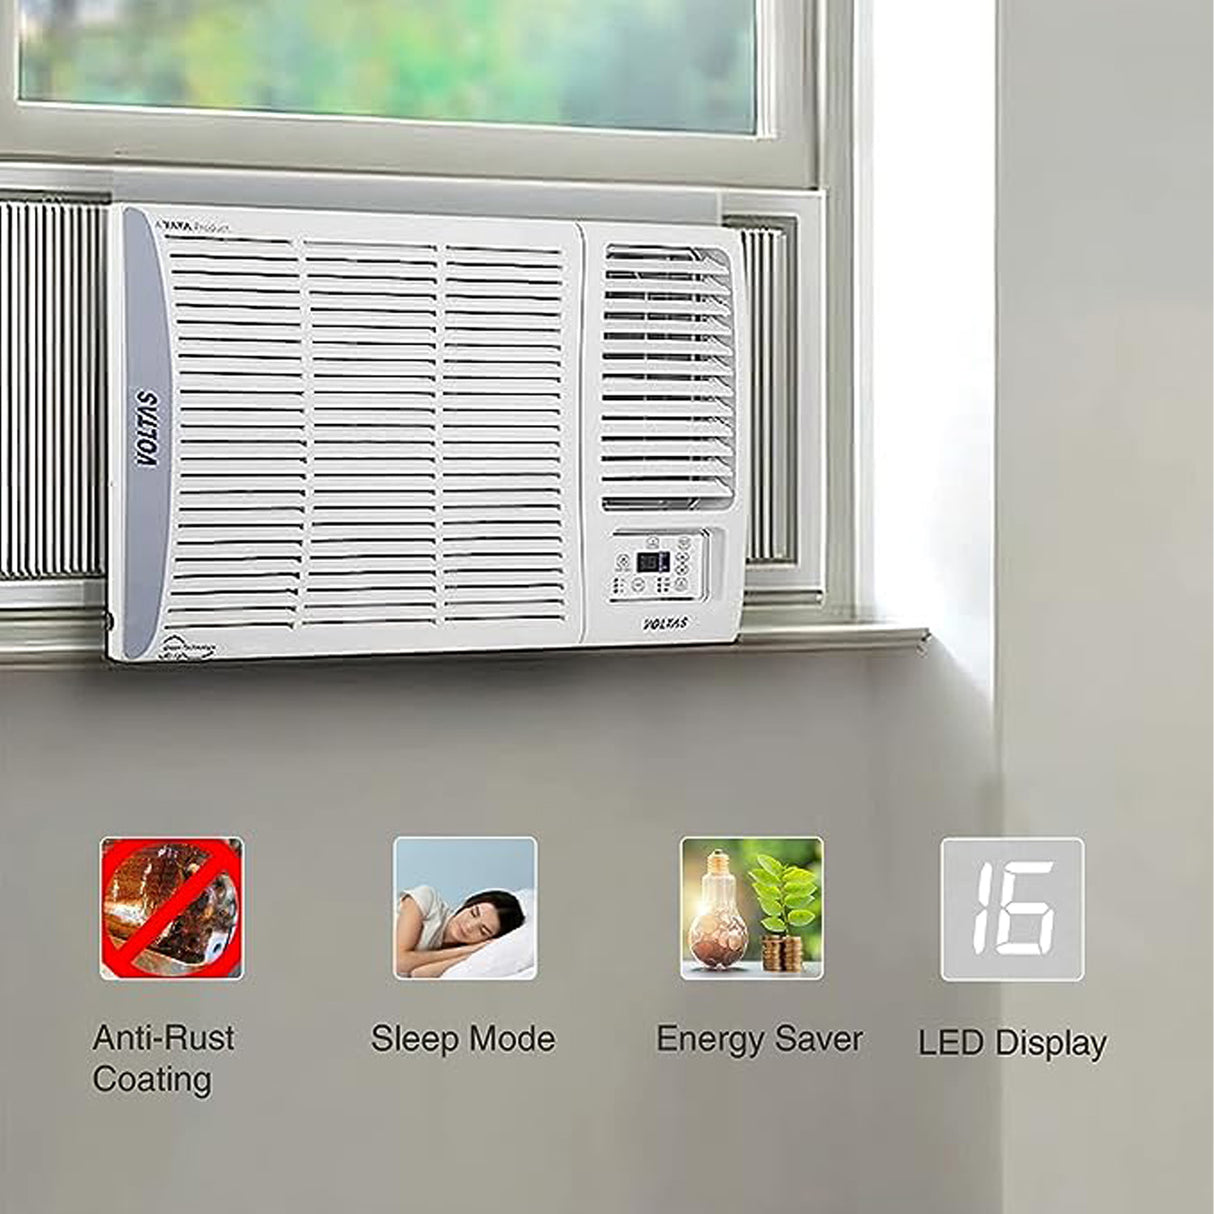 Best Air Conditioner Choice: Voltas 3-Star Window AC, Copper Coil